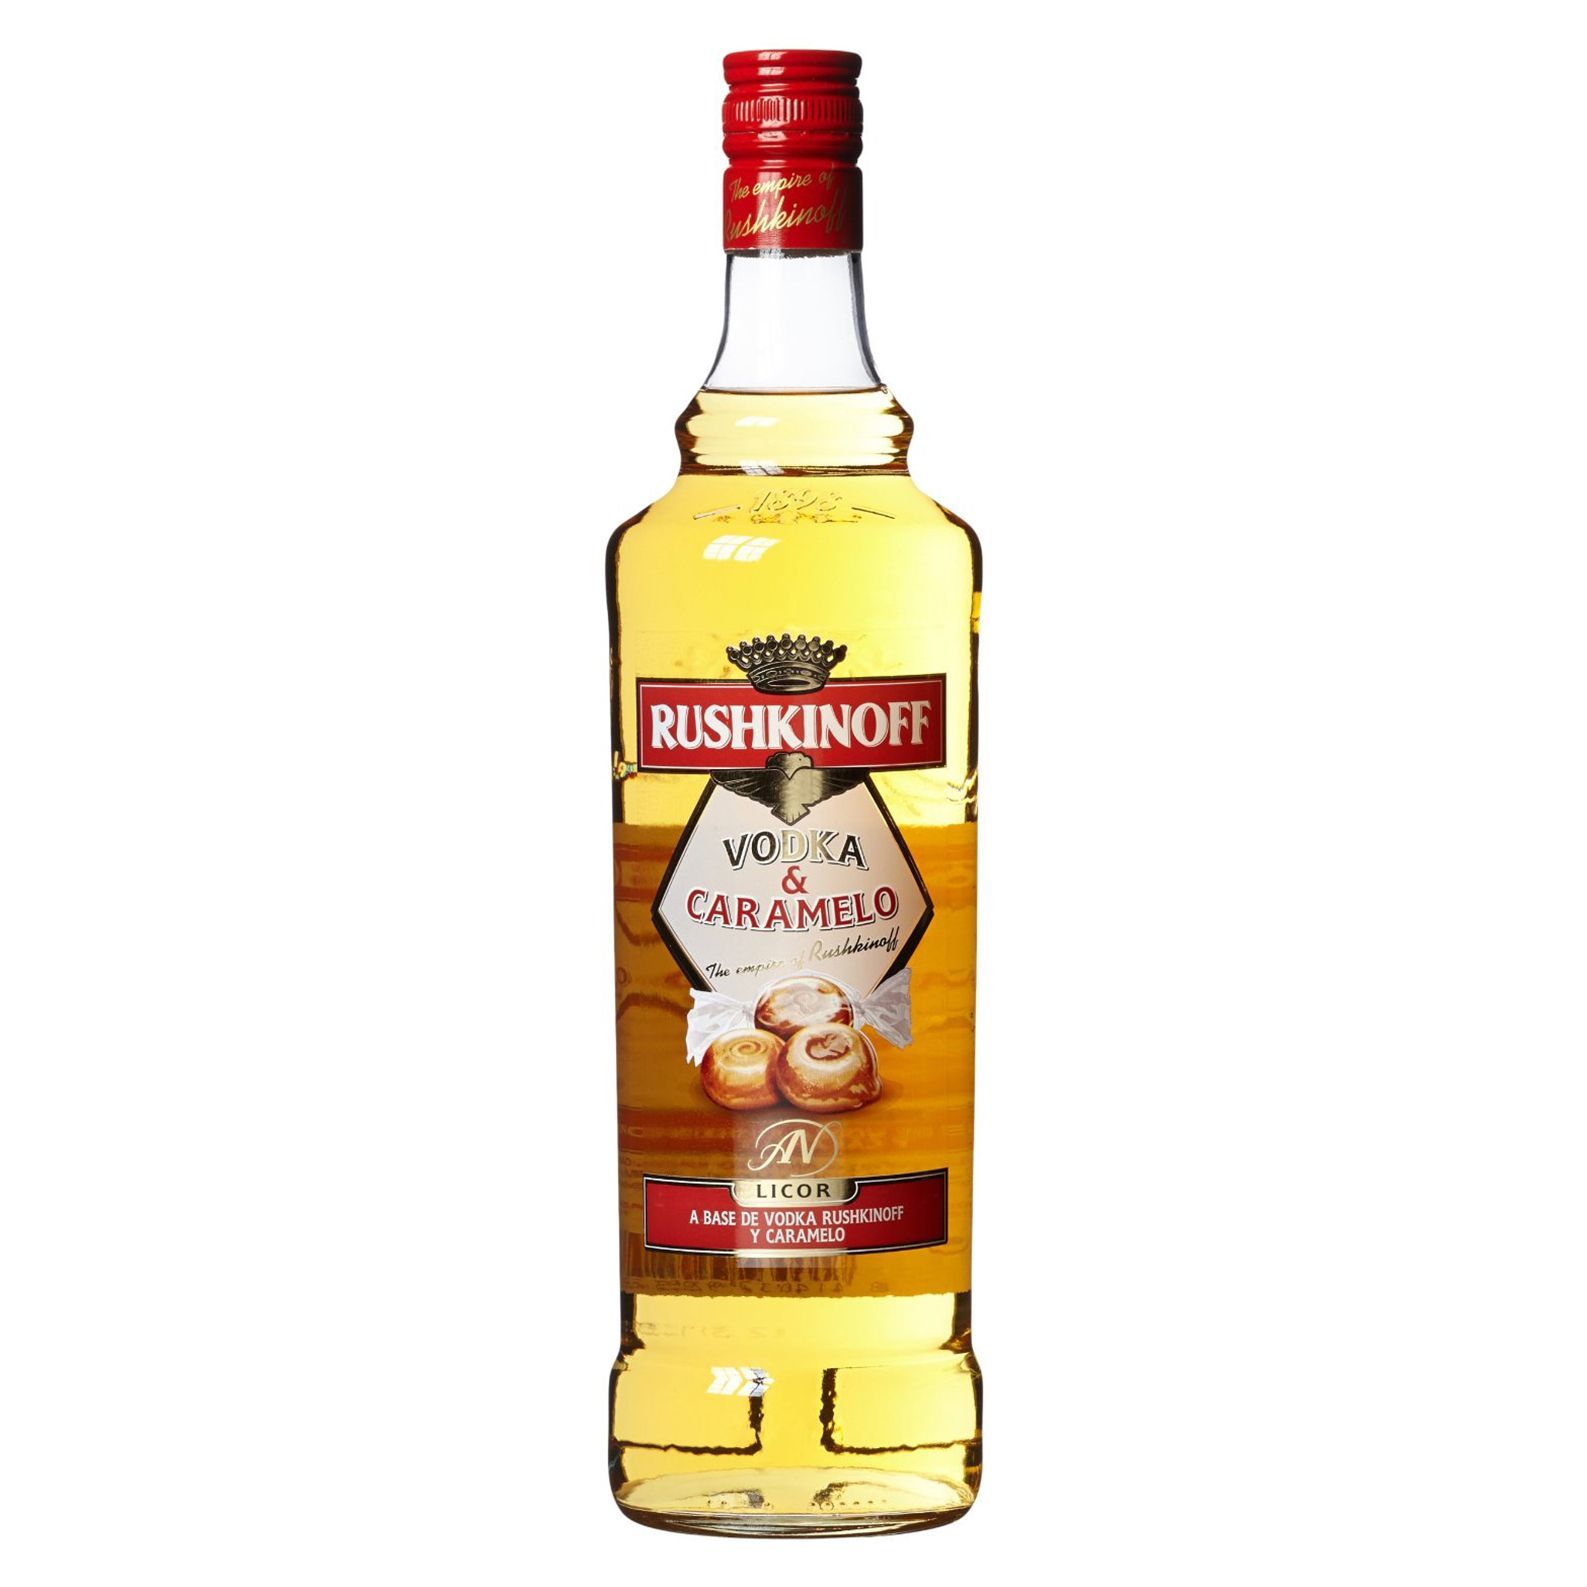 Rushkinoff Vodka & Caramel 1,0 Ltr. alc. 18 Vol.-%, Likör Mallorca